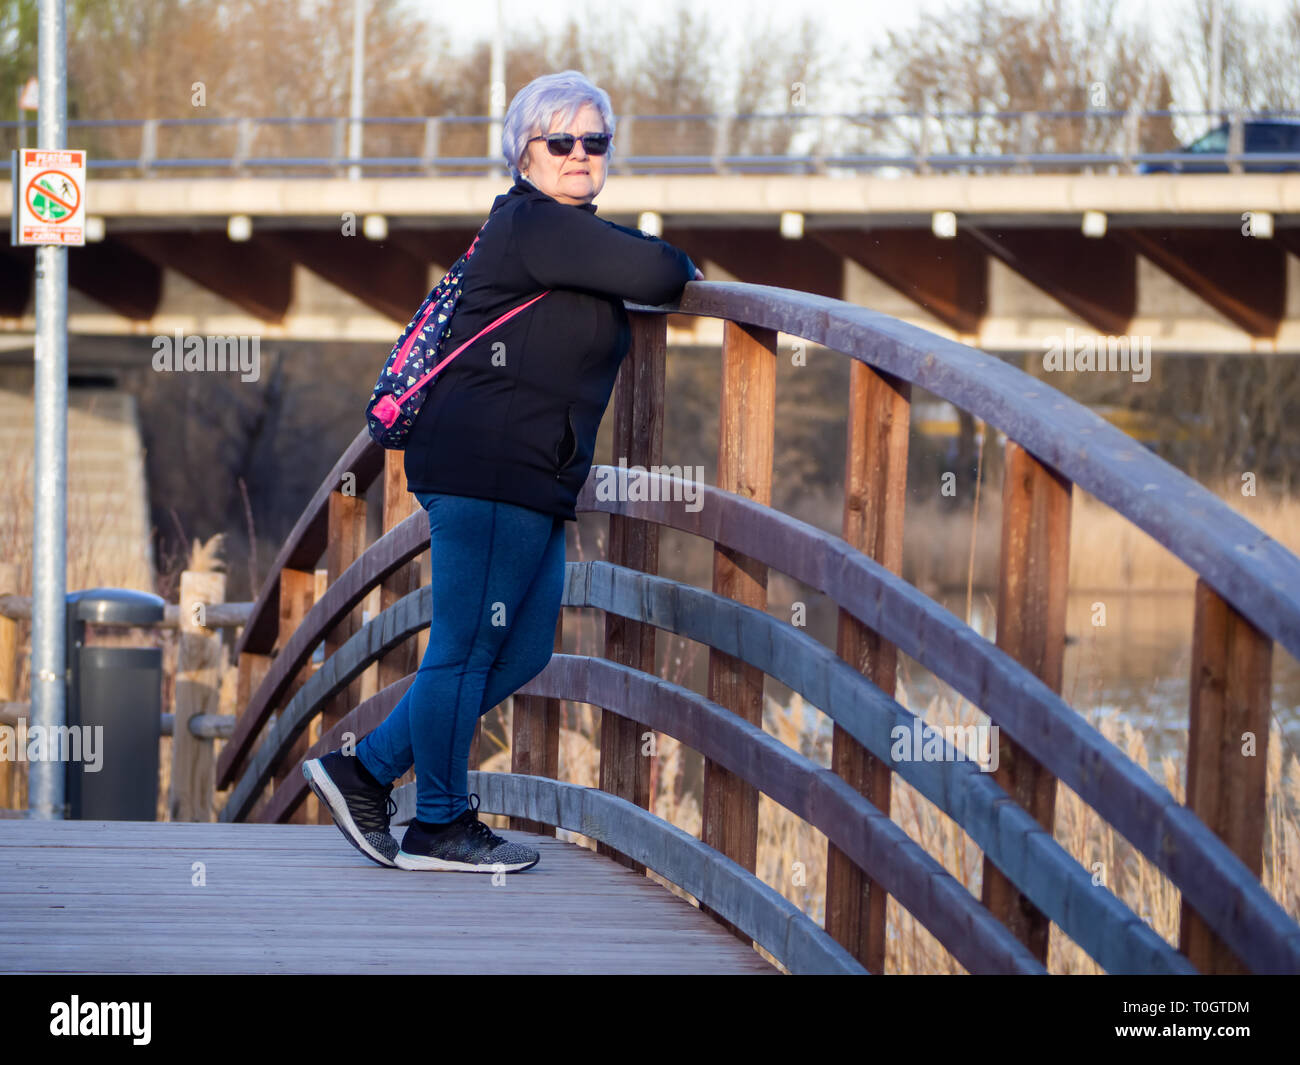 A senior woman with white hair posing in a wooden bridge Stock Photo